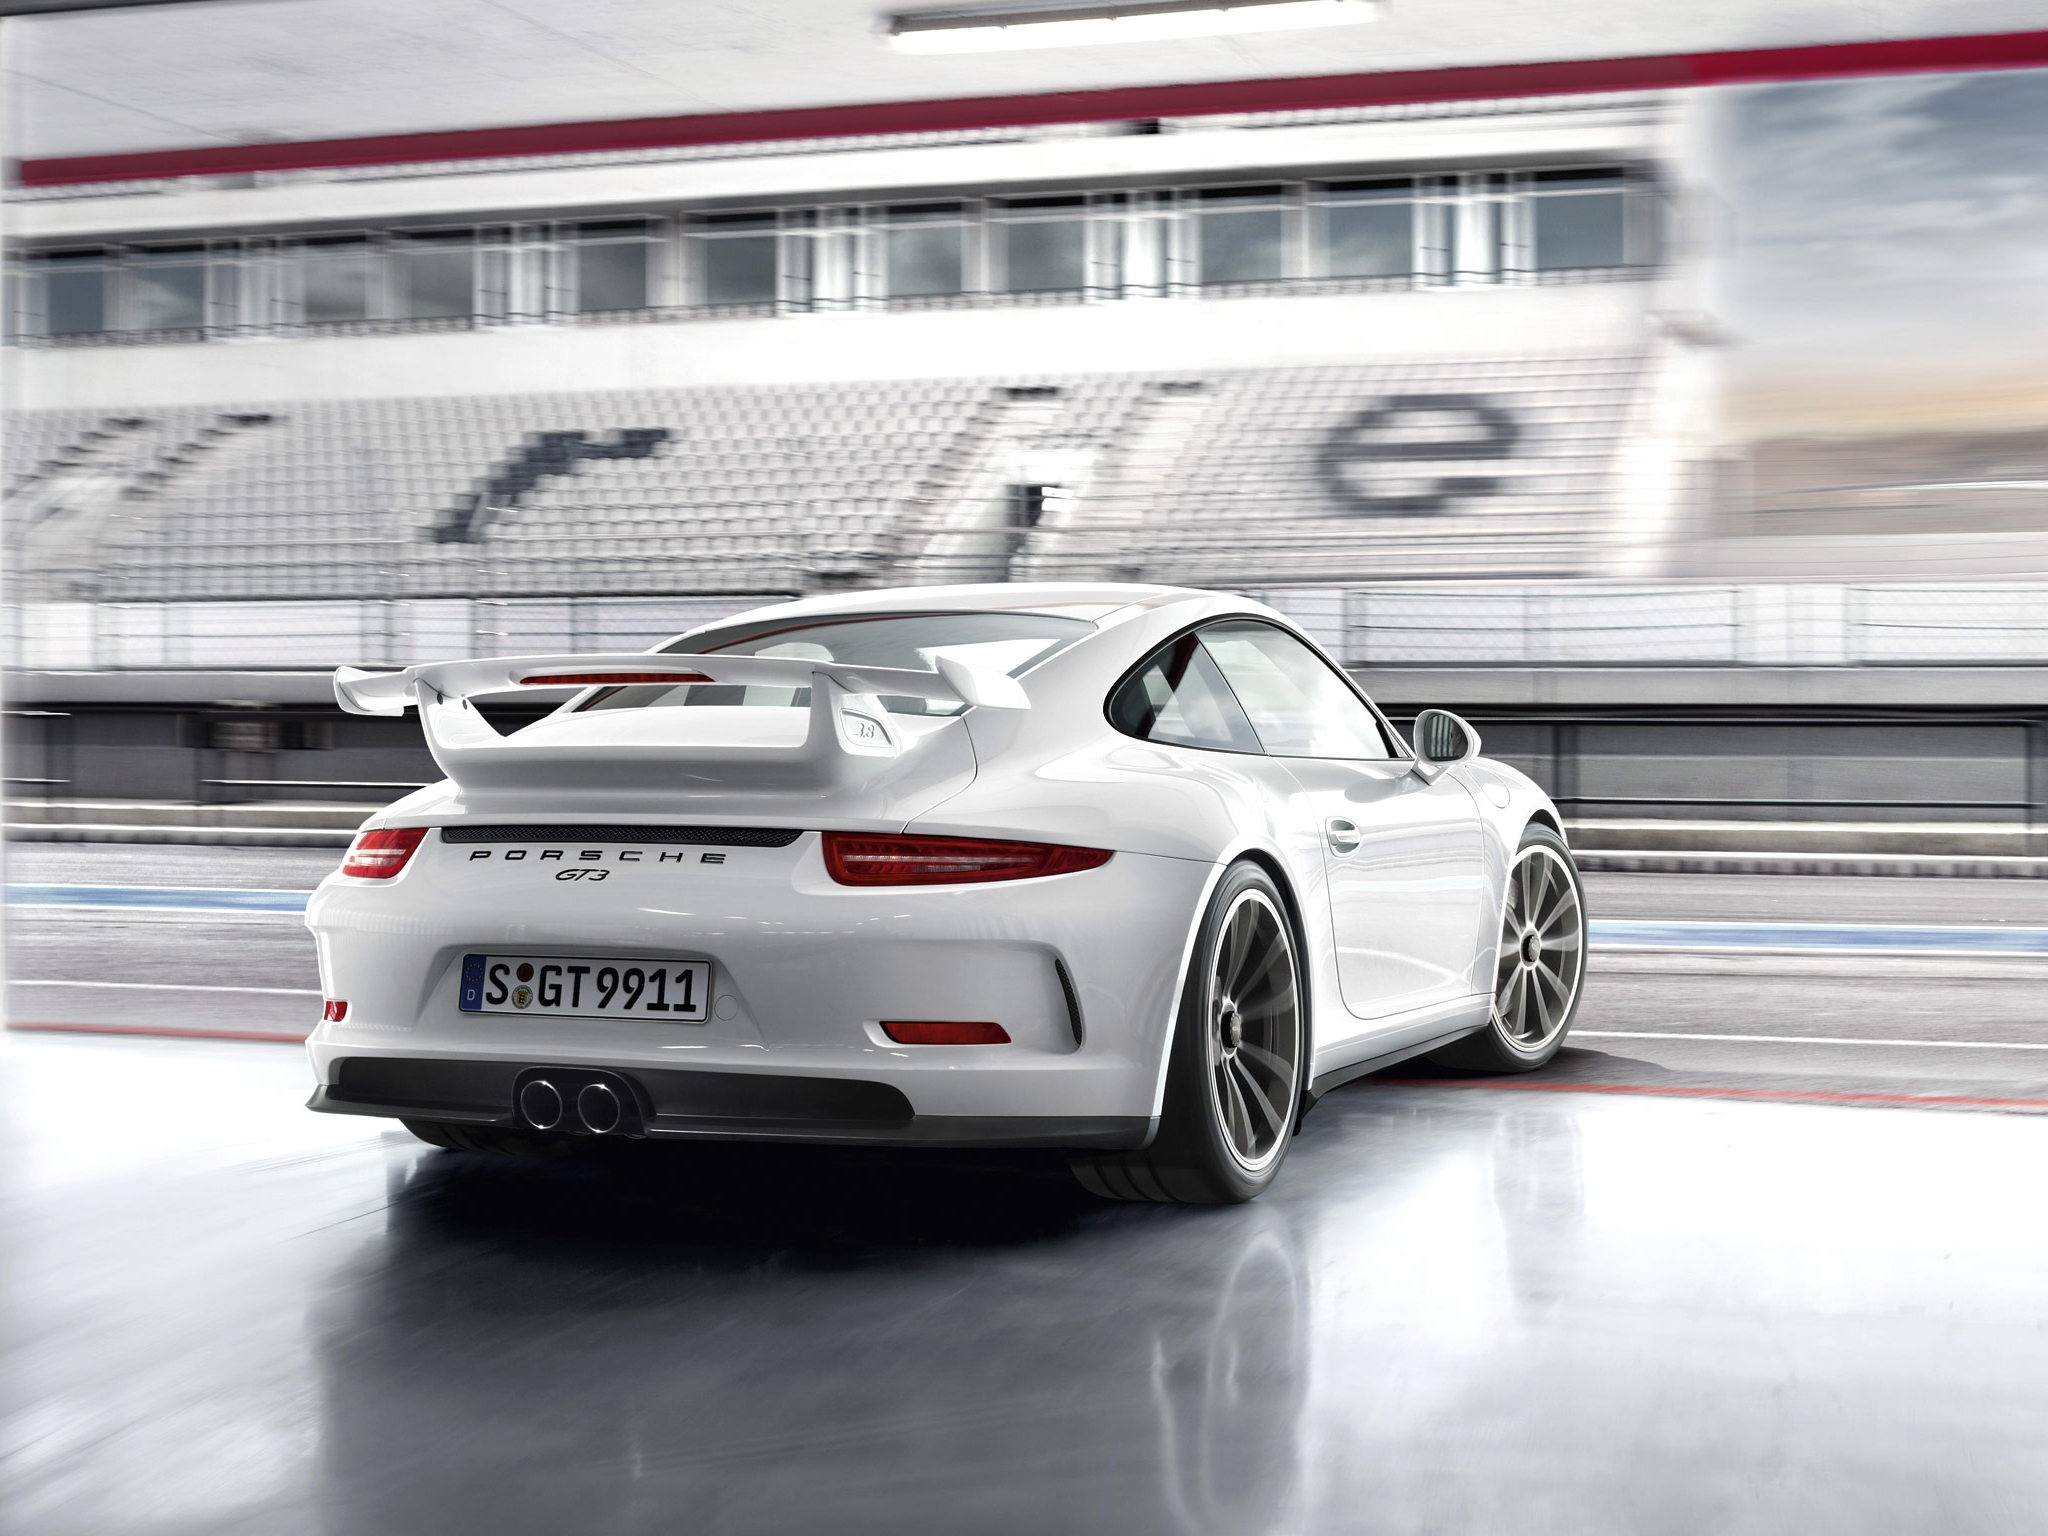 Porsche 911 Gt3 Rs Iphone Wallpapers Top Free Porsche 911 Gt3 Rs Iphone Backgrounds Wallpaperaccess